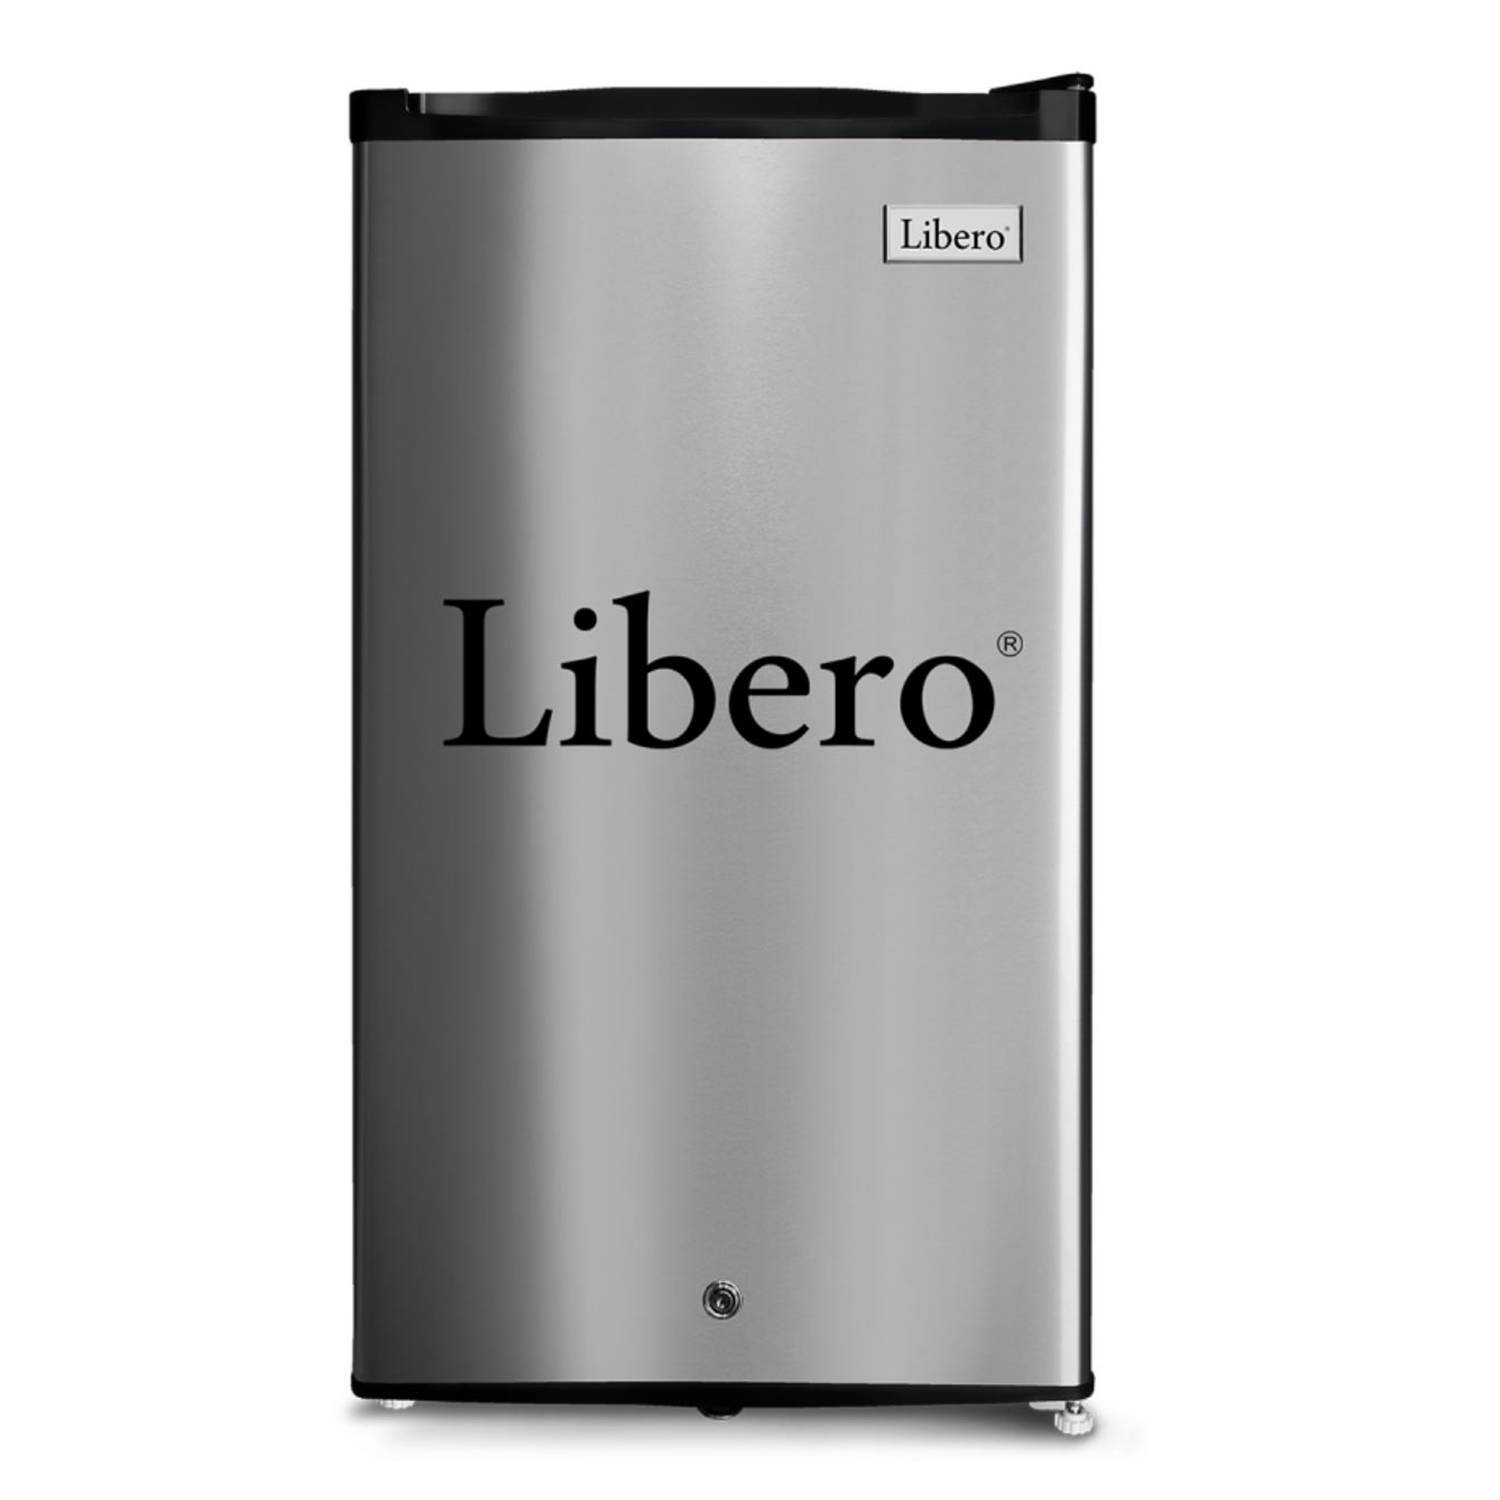 Frigobar Libero Style LFB-101S Inox 92 Litros